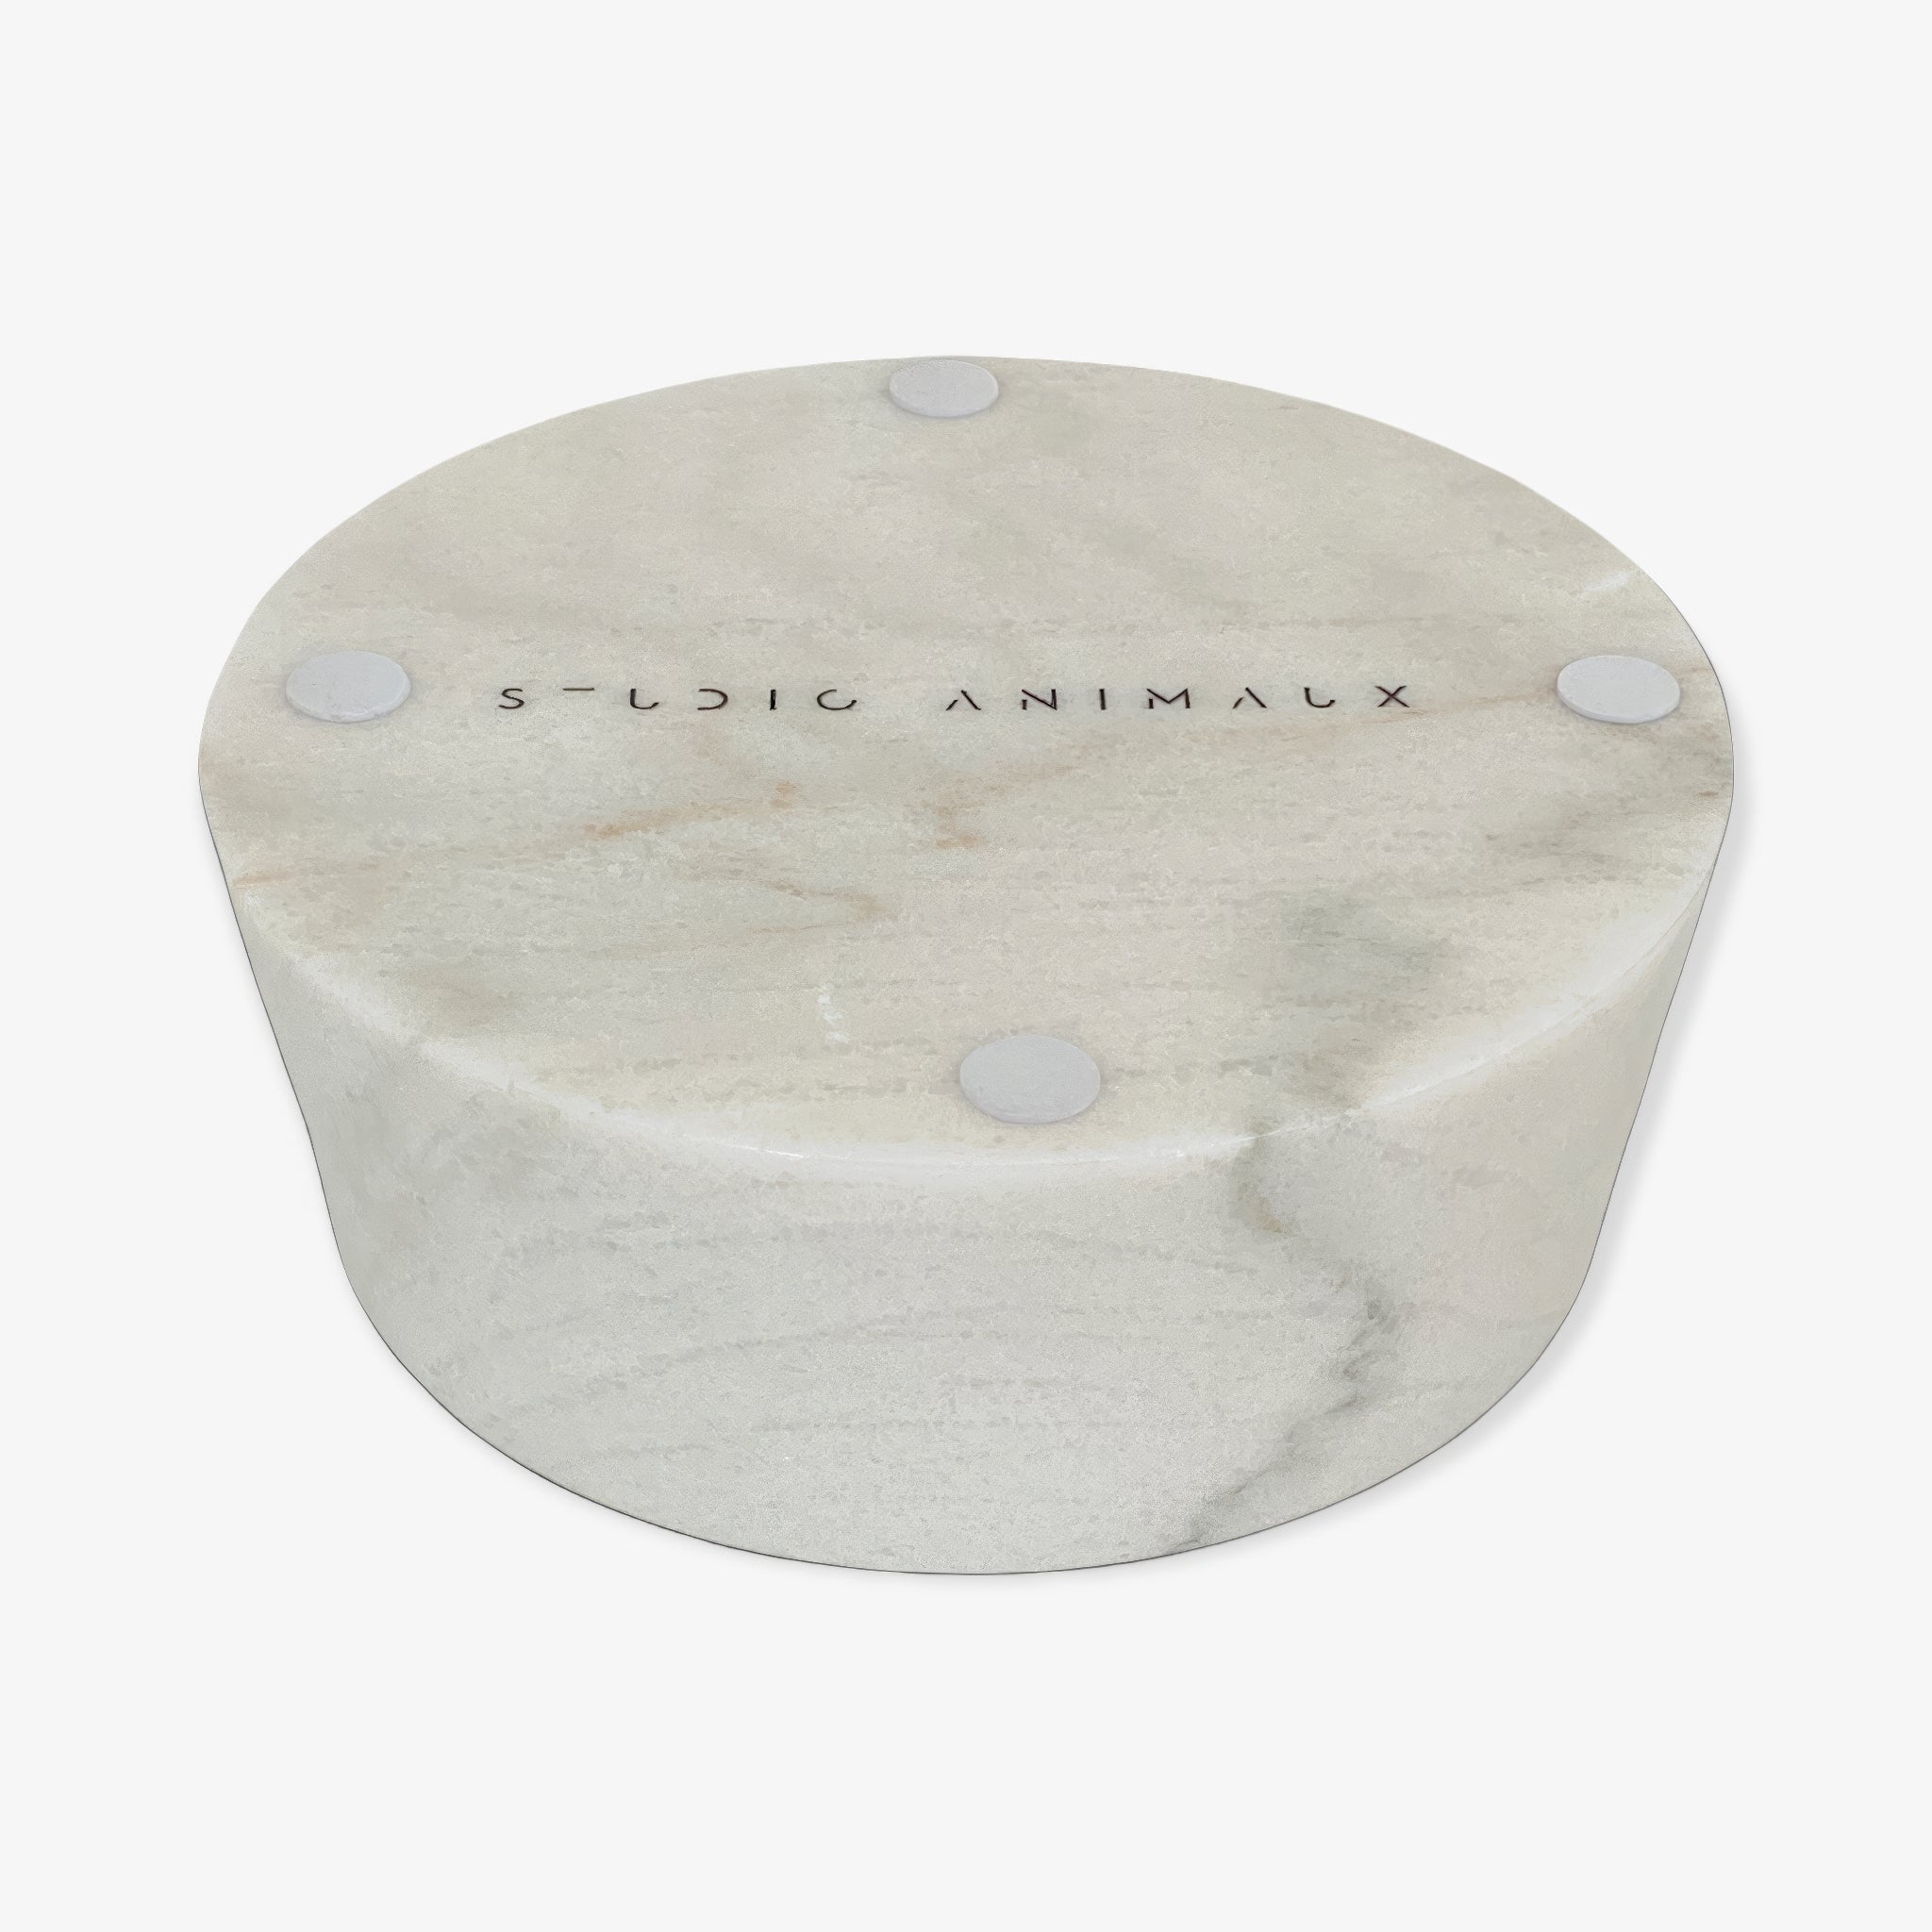 PMAST02153S - Marmorinen ruokakulho tuplapakkaus - Carrara white - 23 cm - Muotitassu